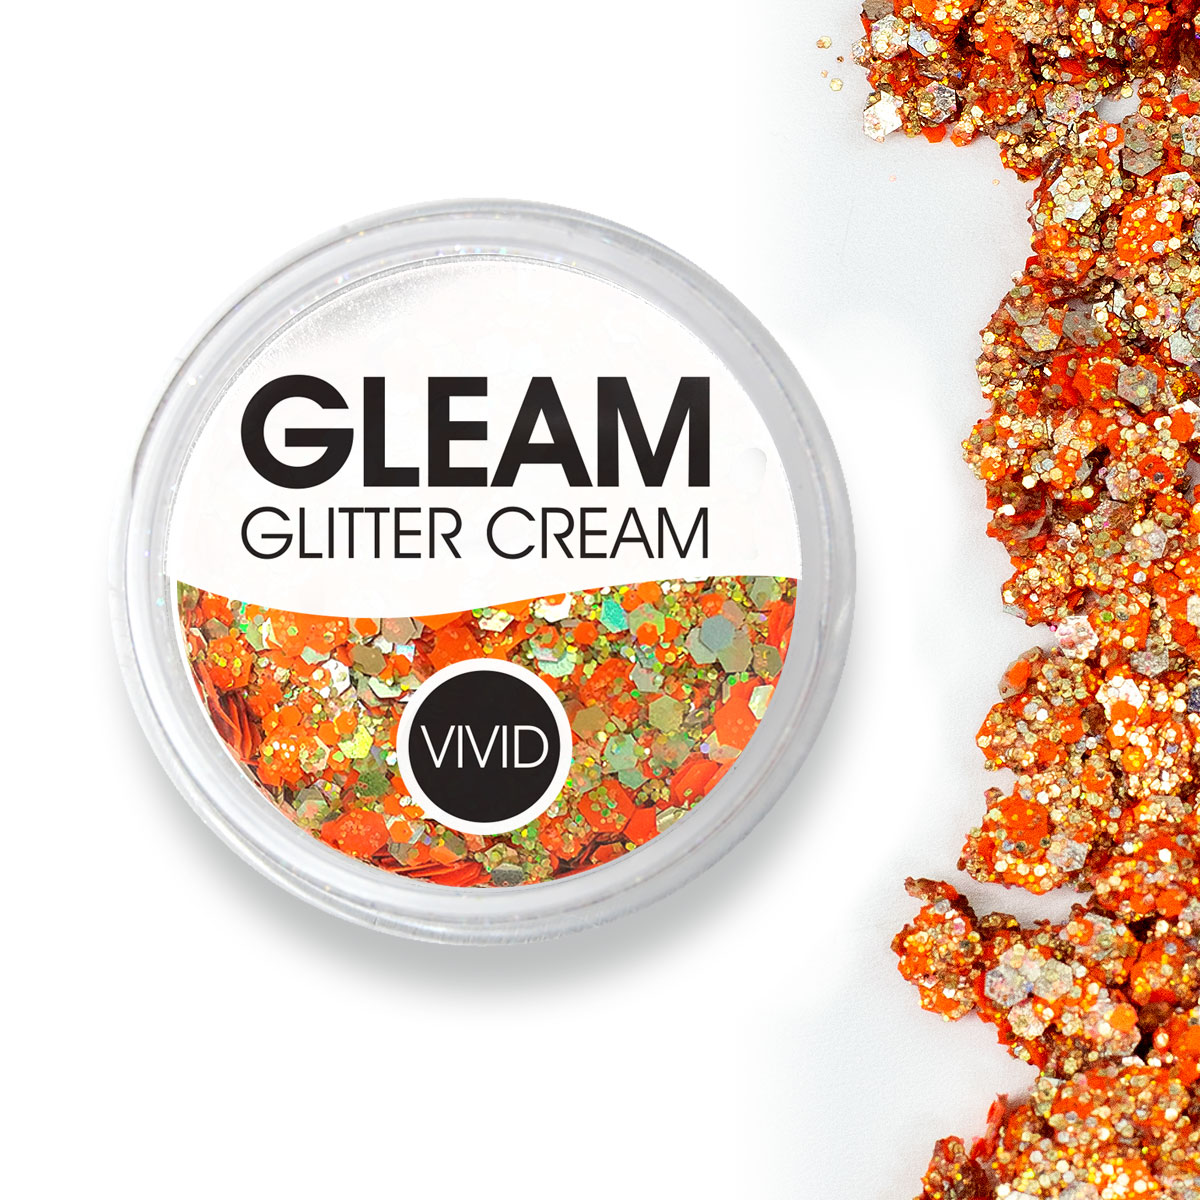 Treasure - Gleam Chunky Glitter Cream – Vivid Glitter